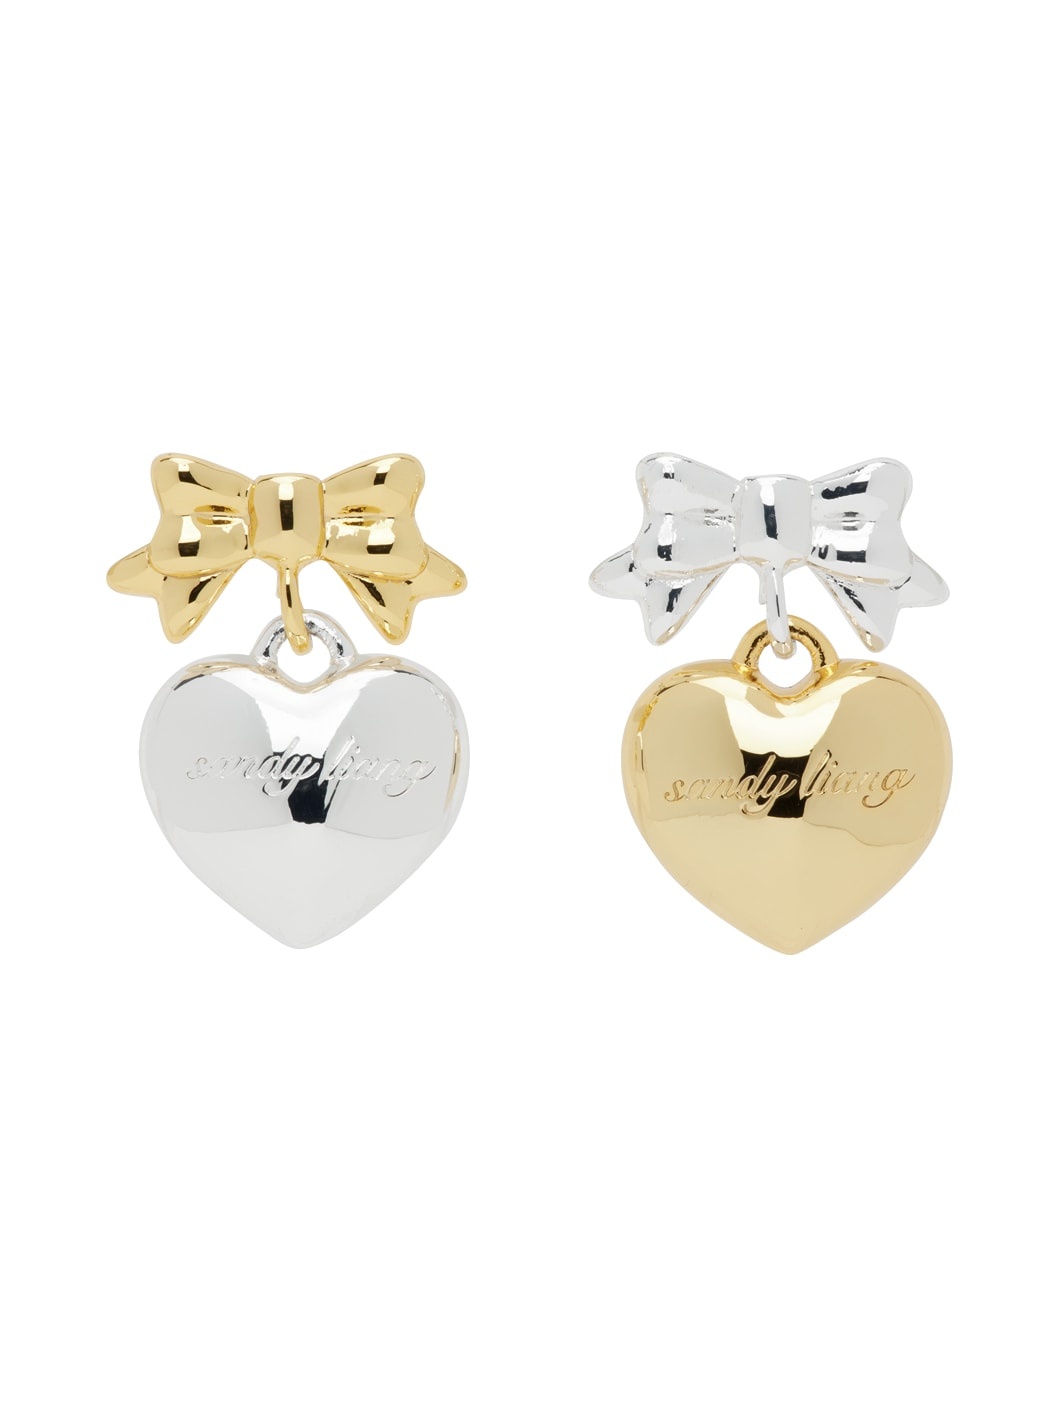 Silver & Gold Ballerina Earrings - 1